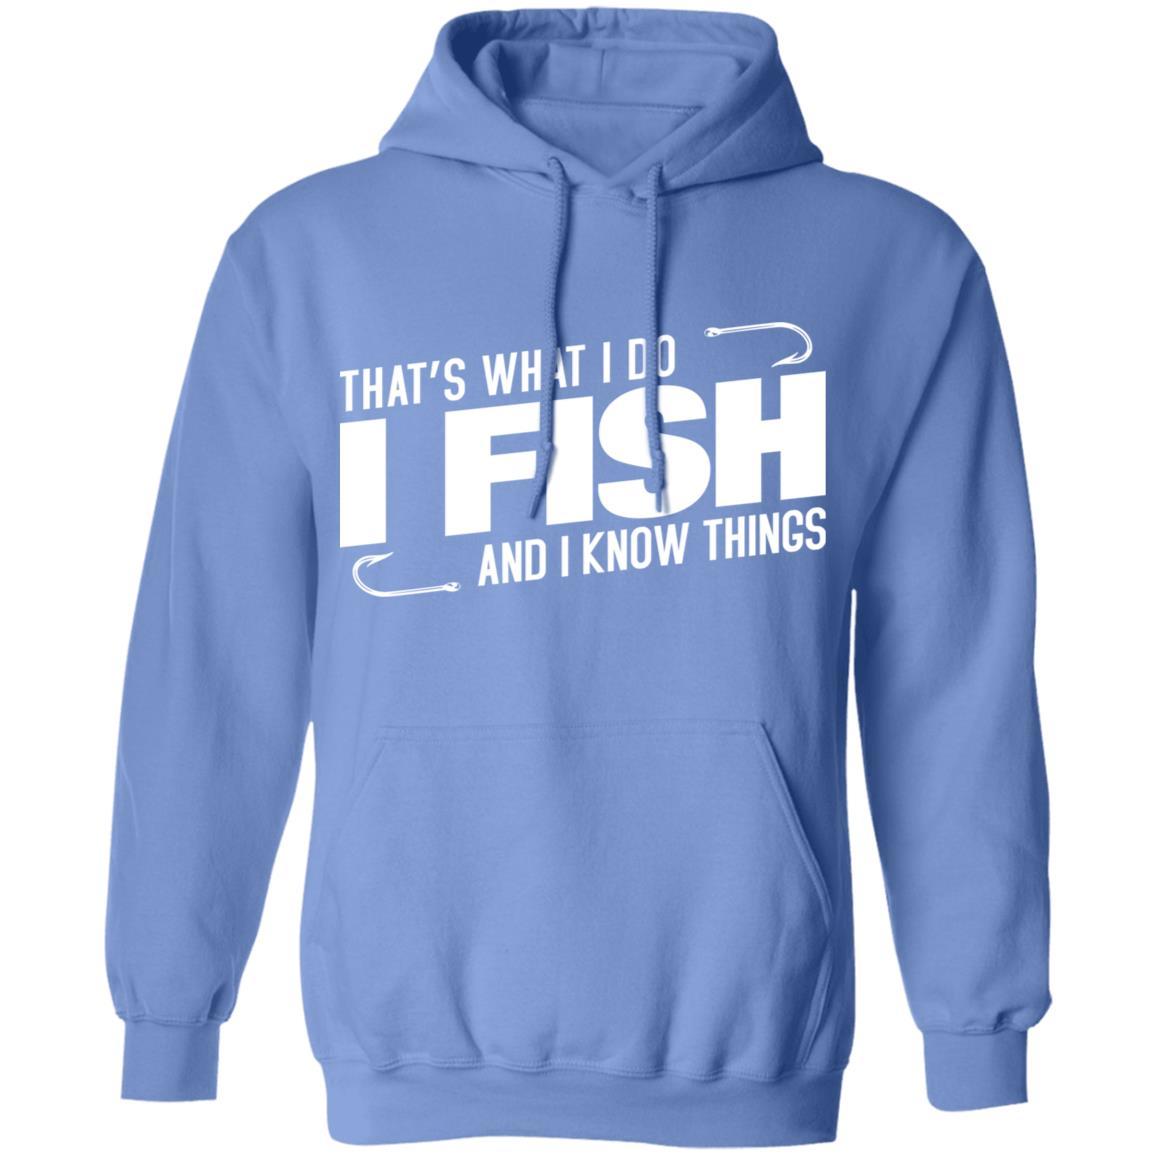 That's what i do i fish and i know things hoodie i carolina blue